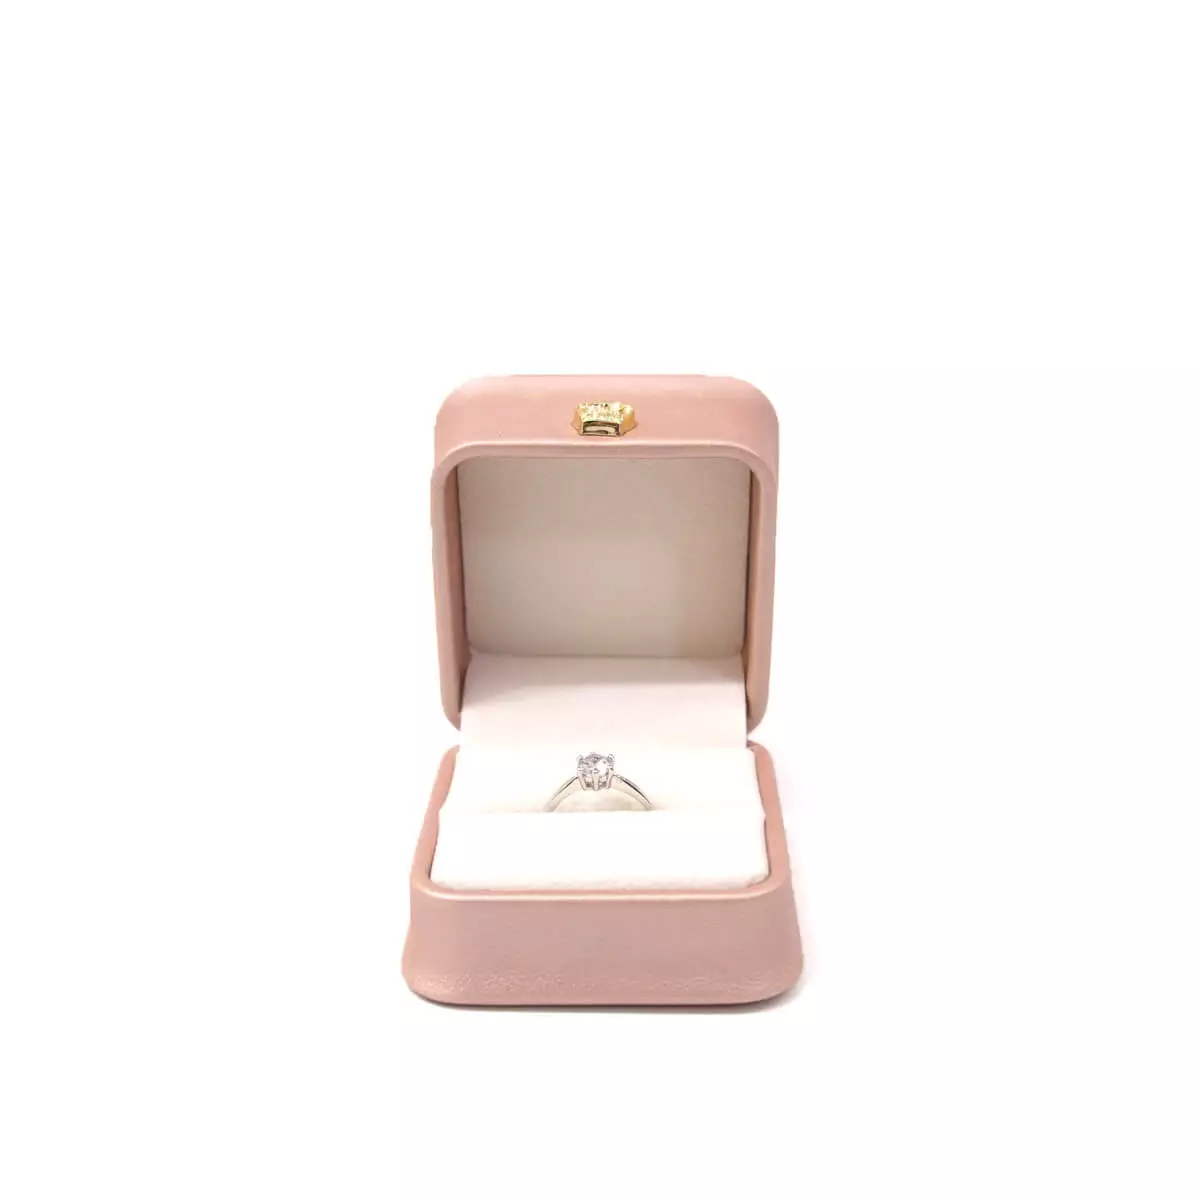 posie ring box in pink opening